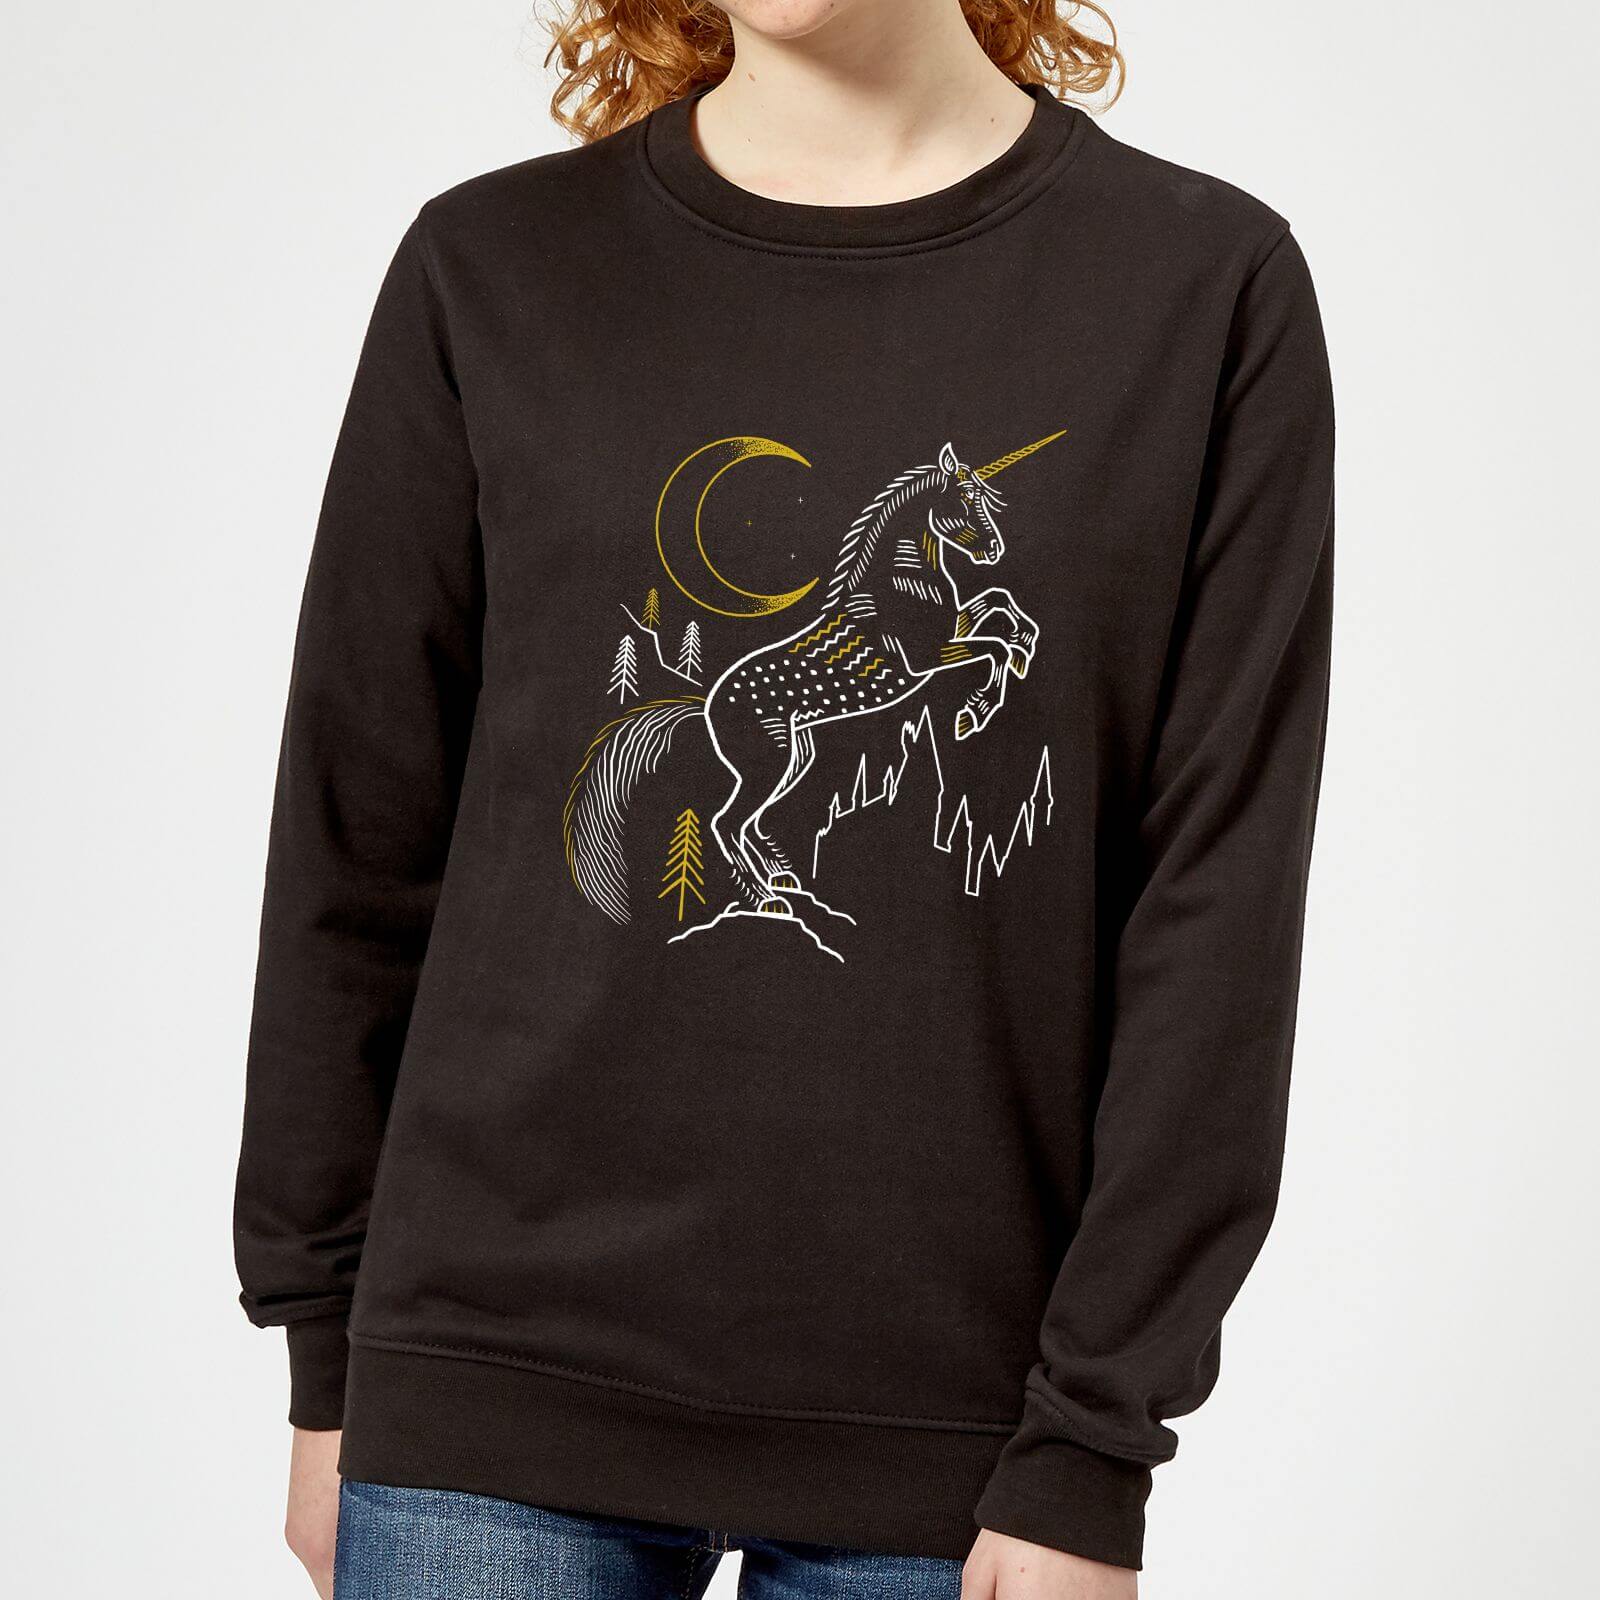 Harry Potter Unicorn Women's Sweatshirt - Black - S